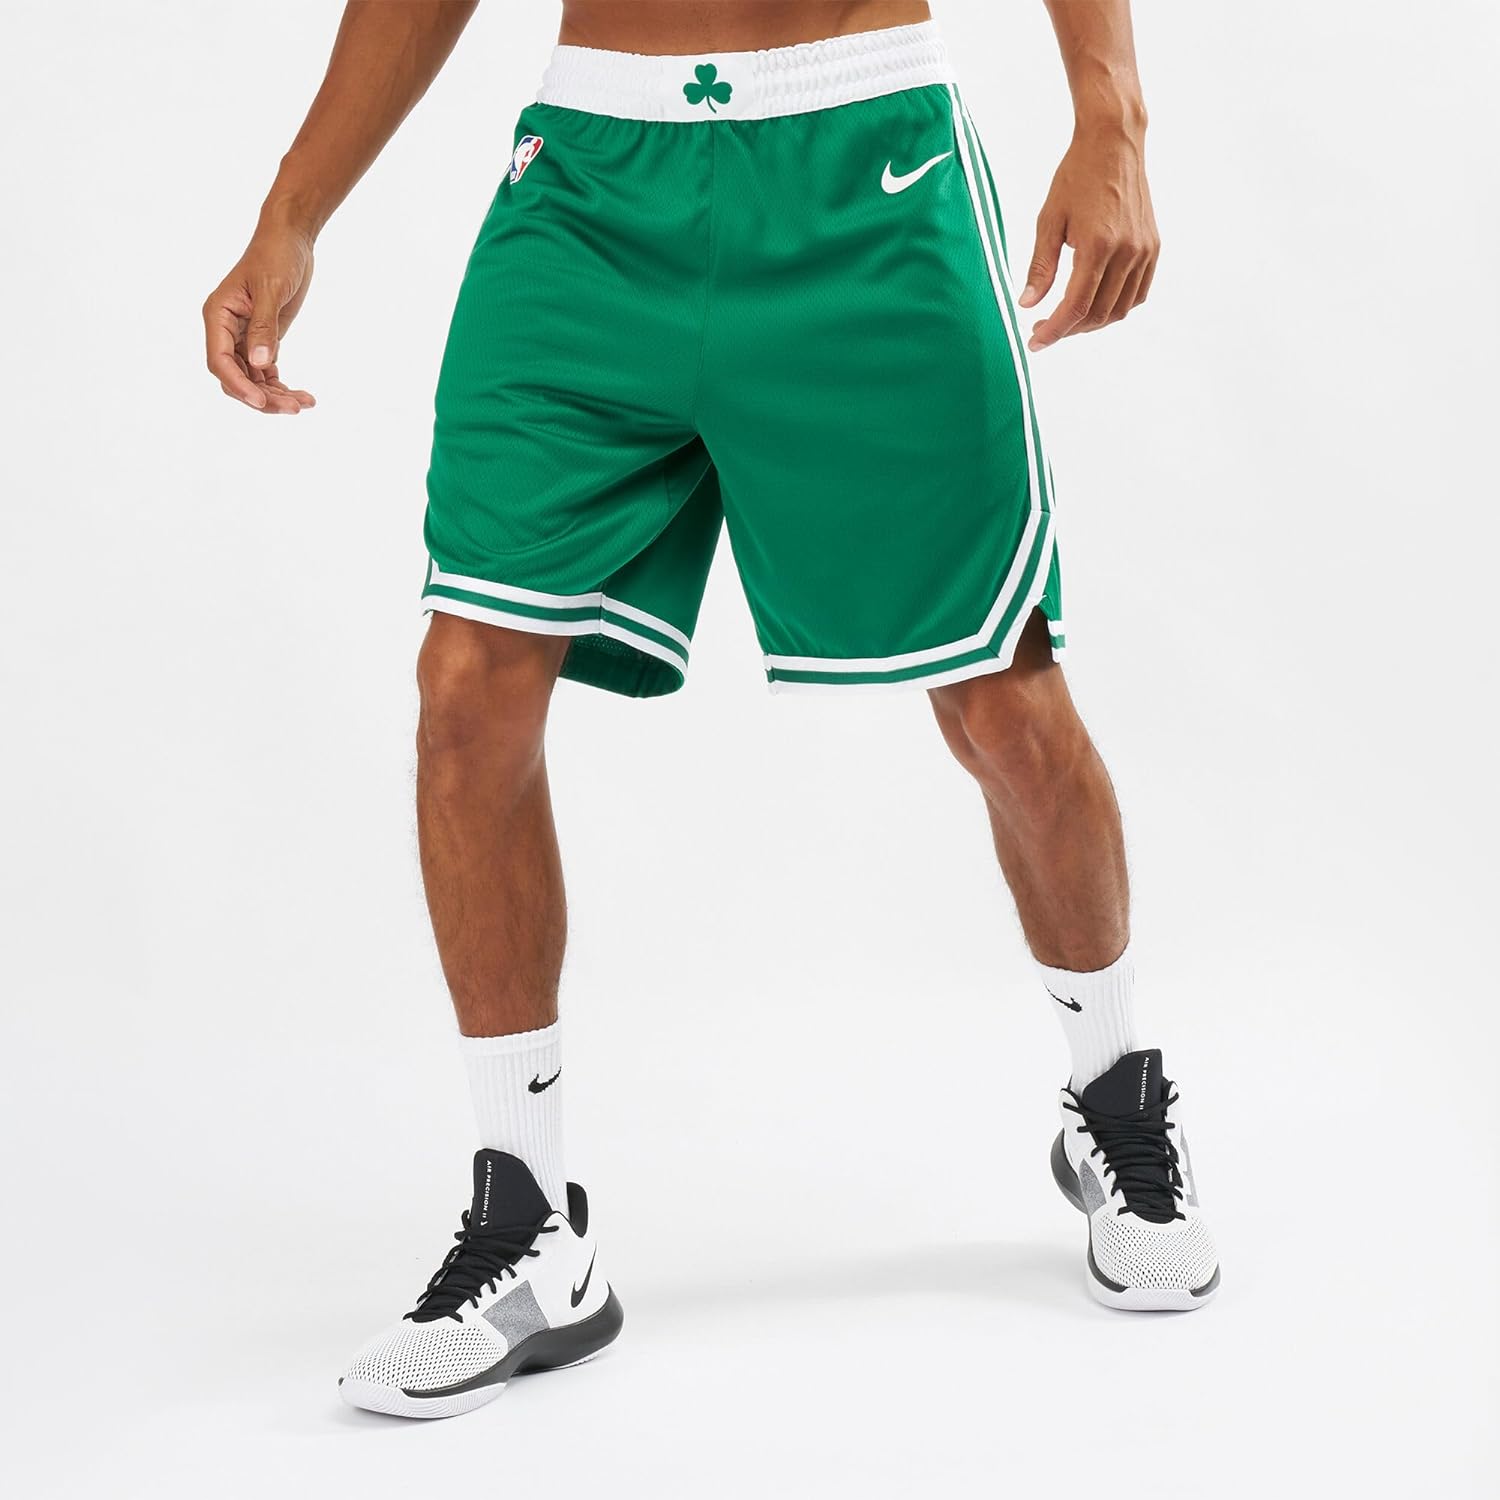 ALCOACH NBA Men's Active Knit Basketball Training Shorts